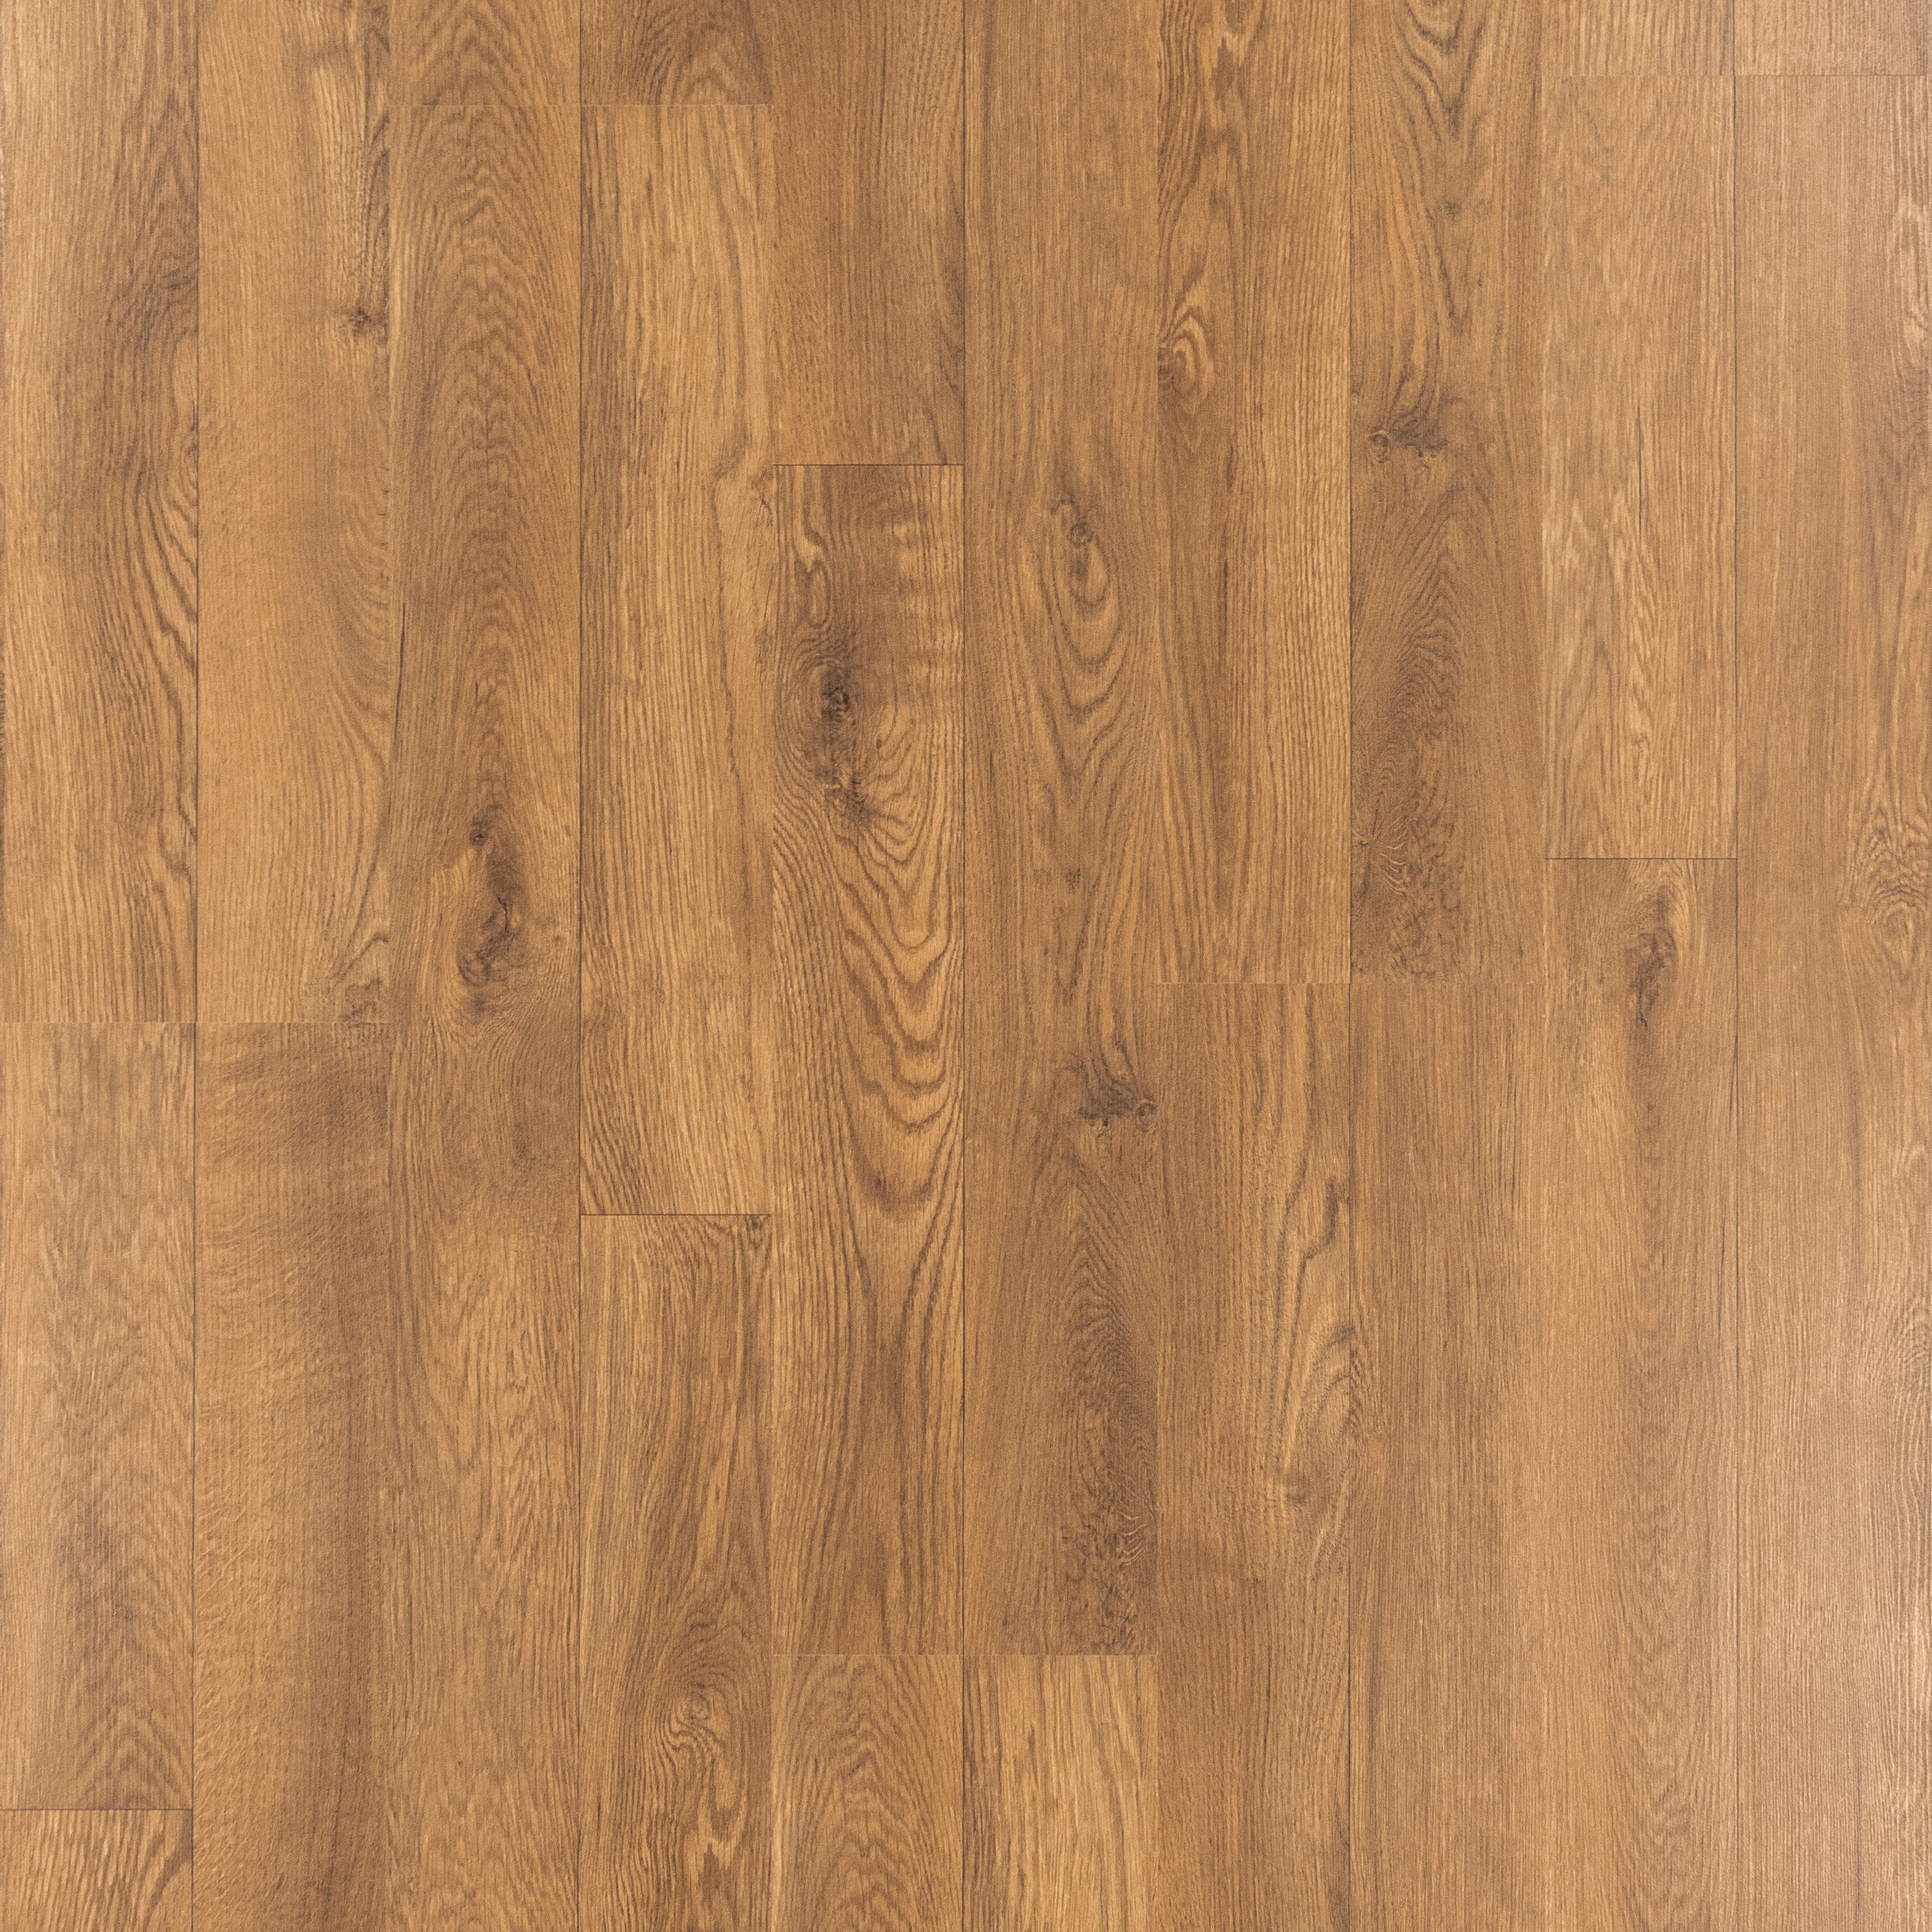 Acorn Oak 8-mm T x 8-in W x 48-in L Wood Plank Laminate Flooring (21.26-sq ft) in Brown | - Style Selections 360831-3K456